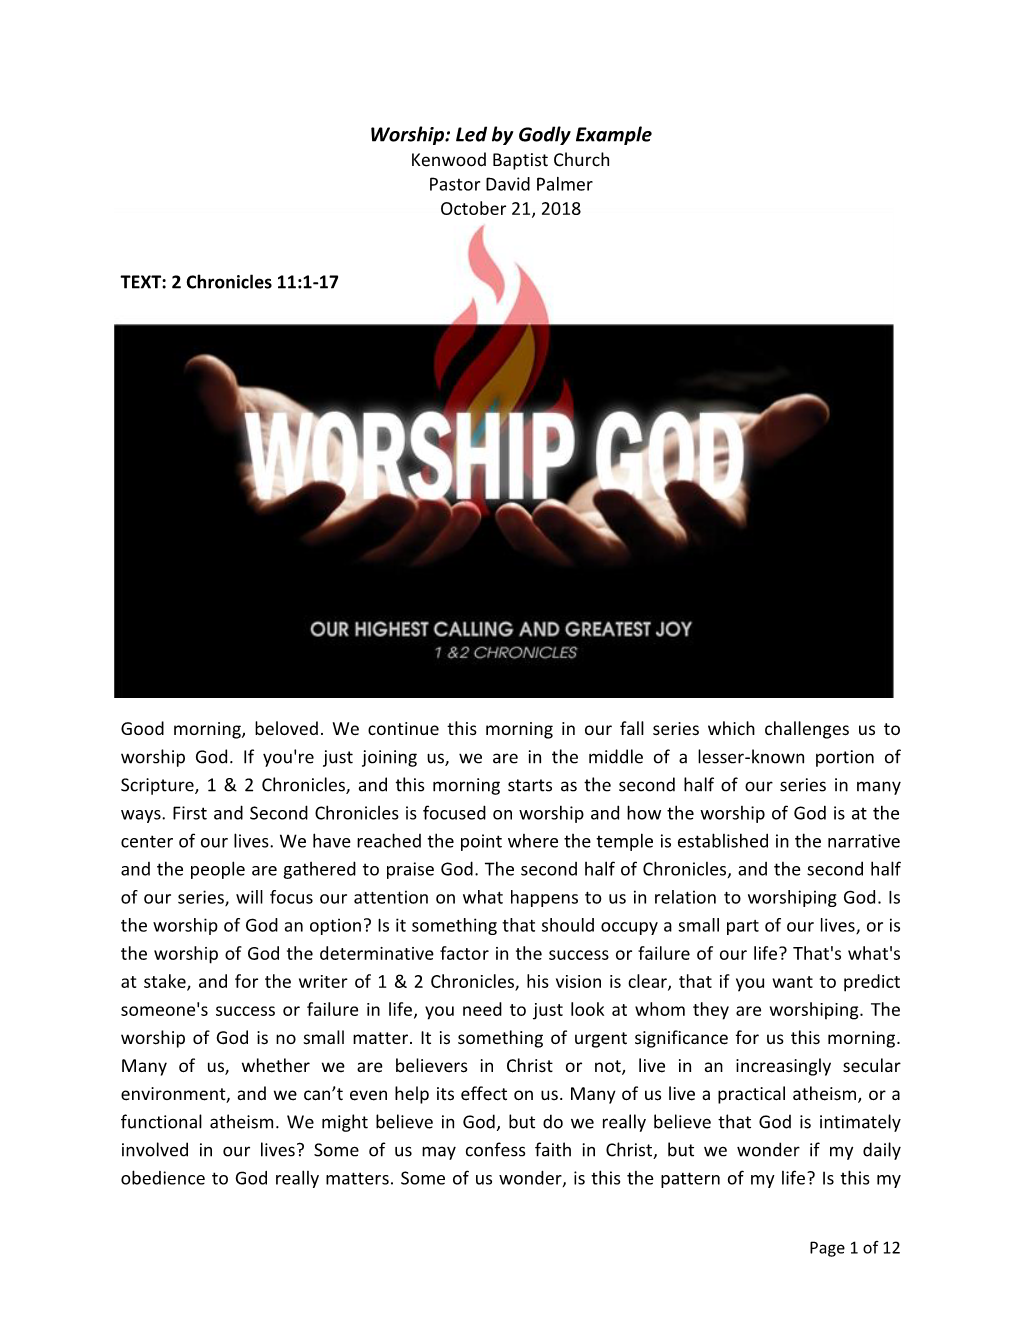 Worship: Led by Godly Example Kenwood Baptist Church Pastor David Palmer October 21, 2018